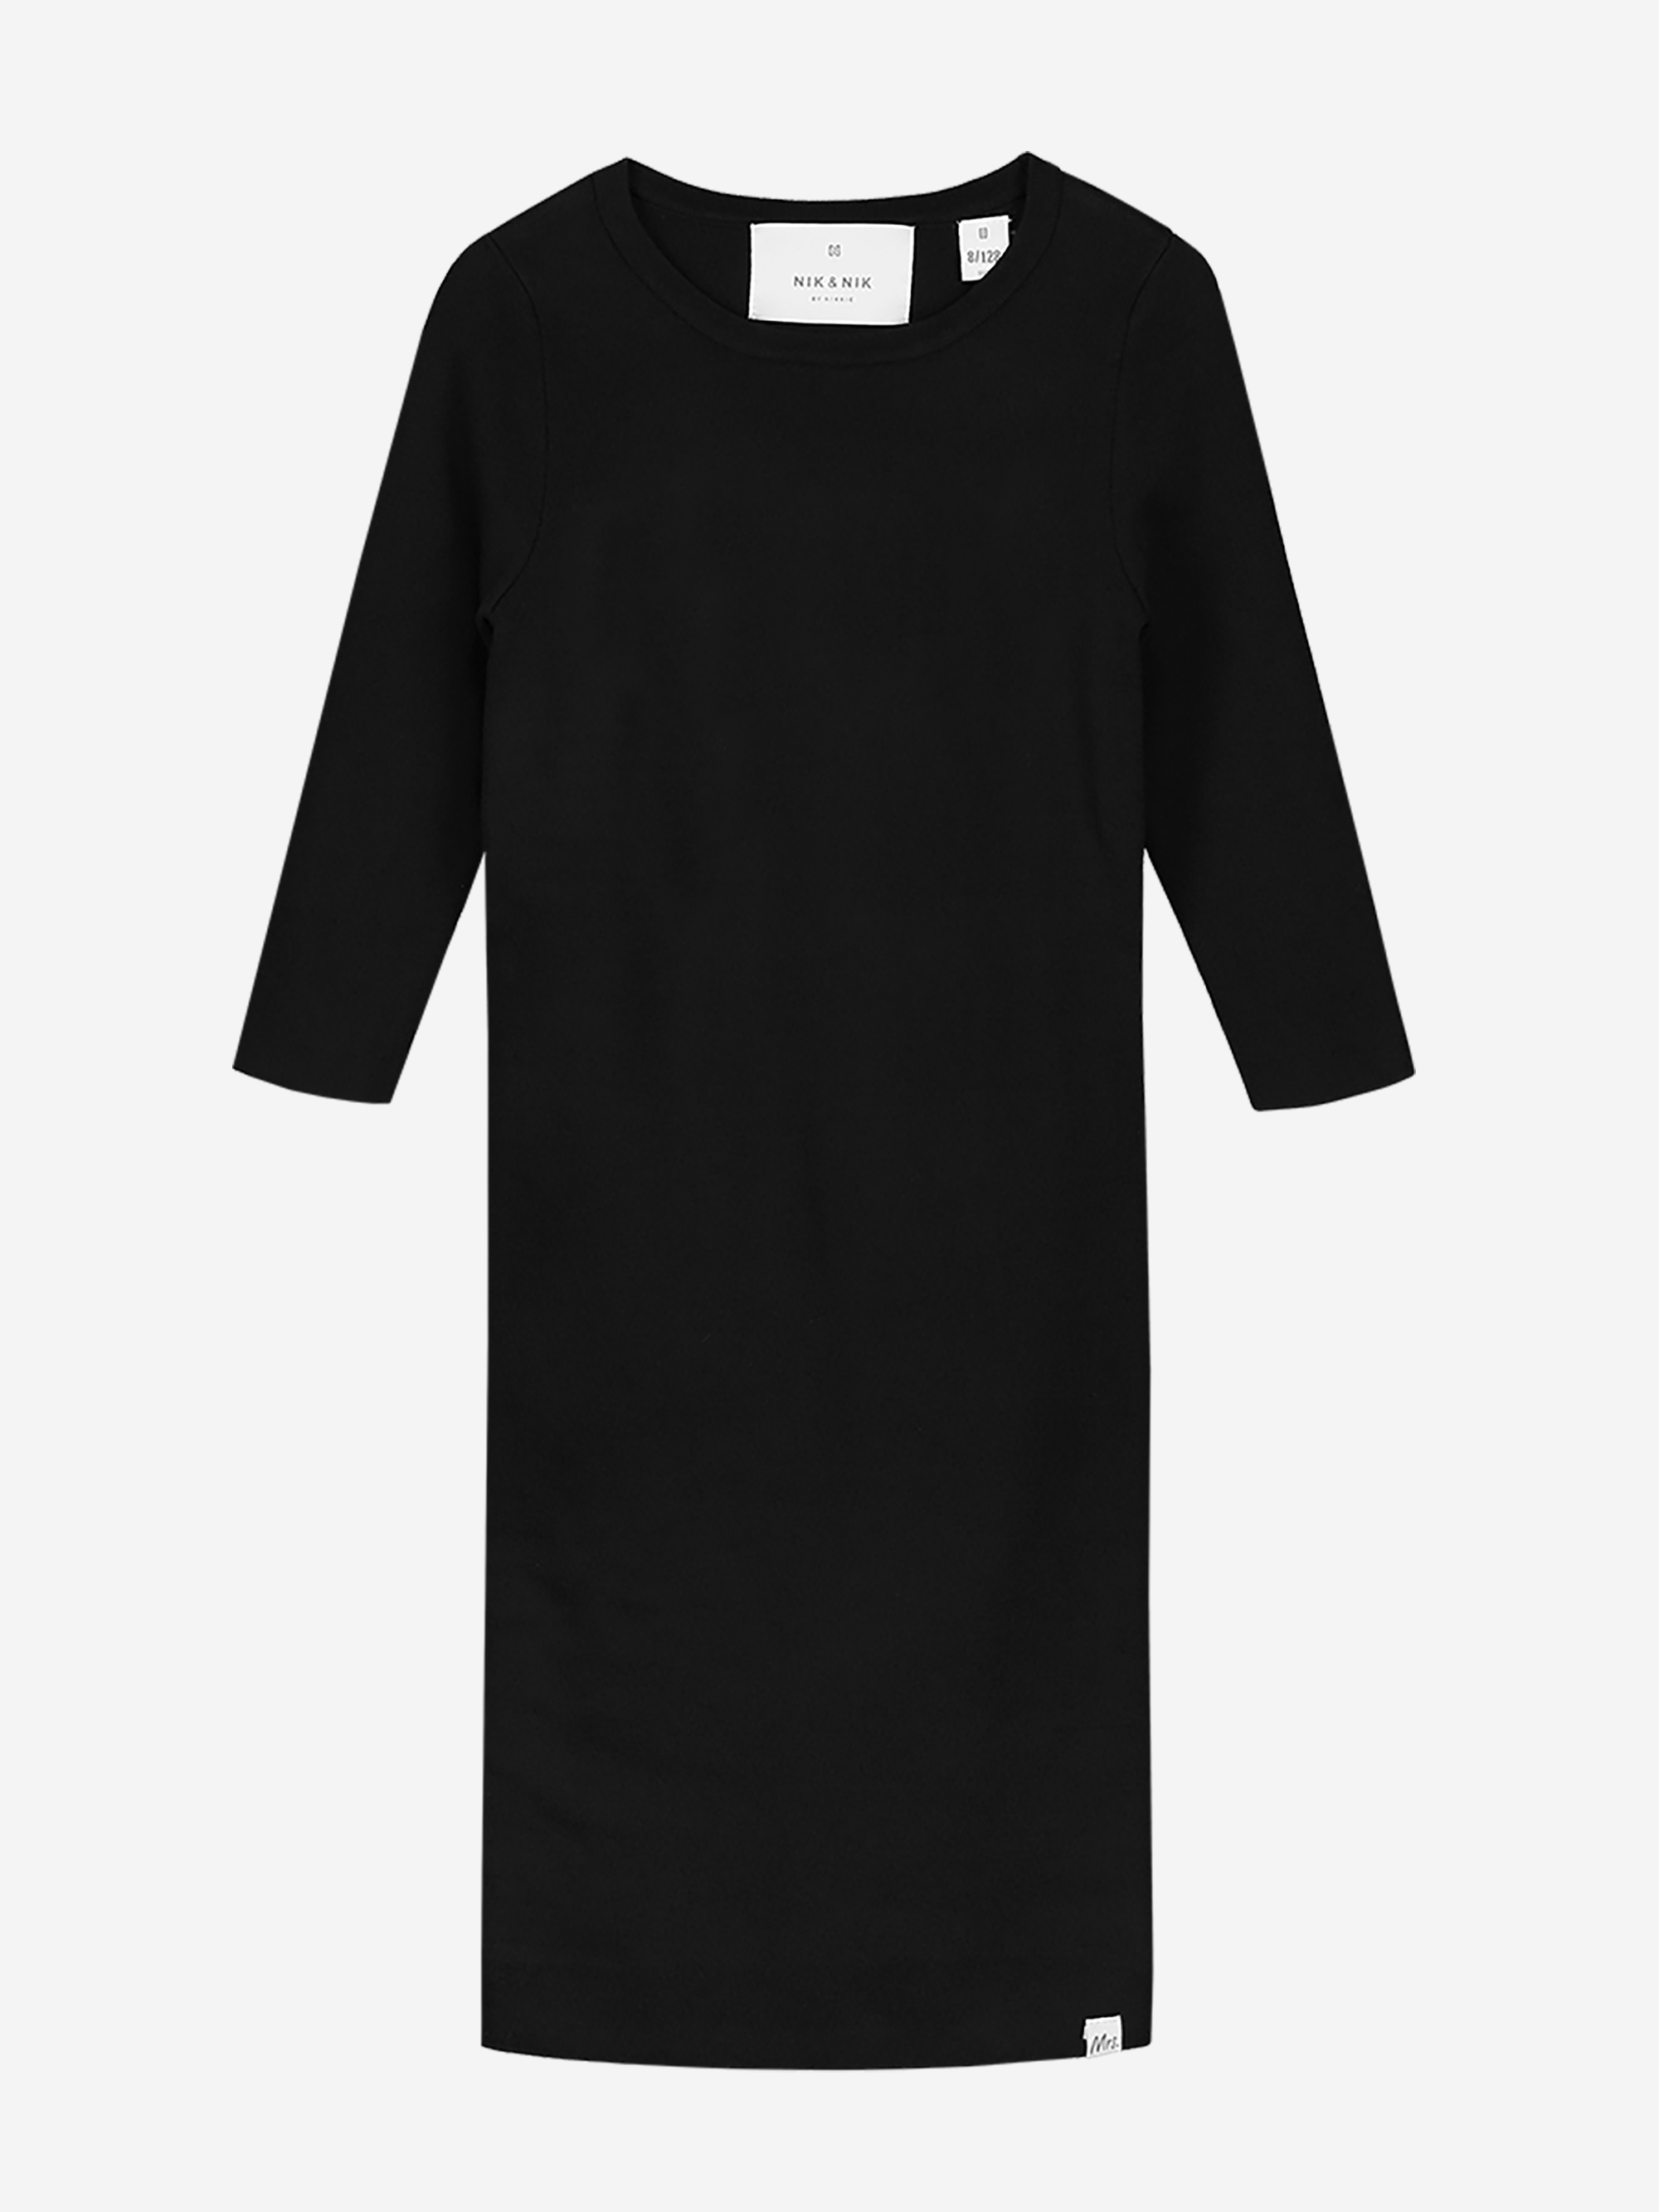 Black dress with three quarter sleeves